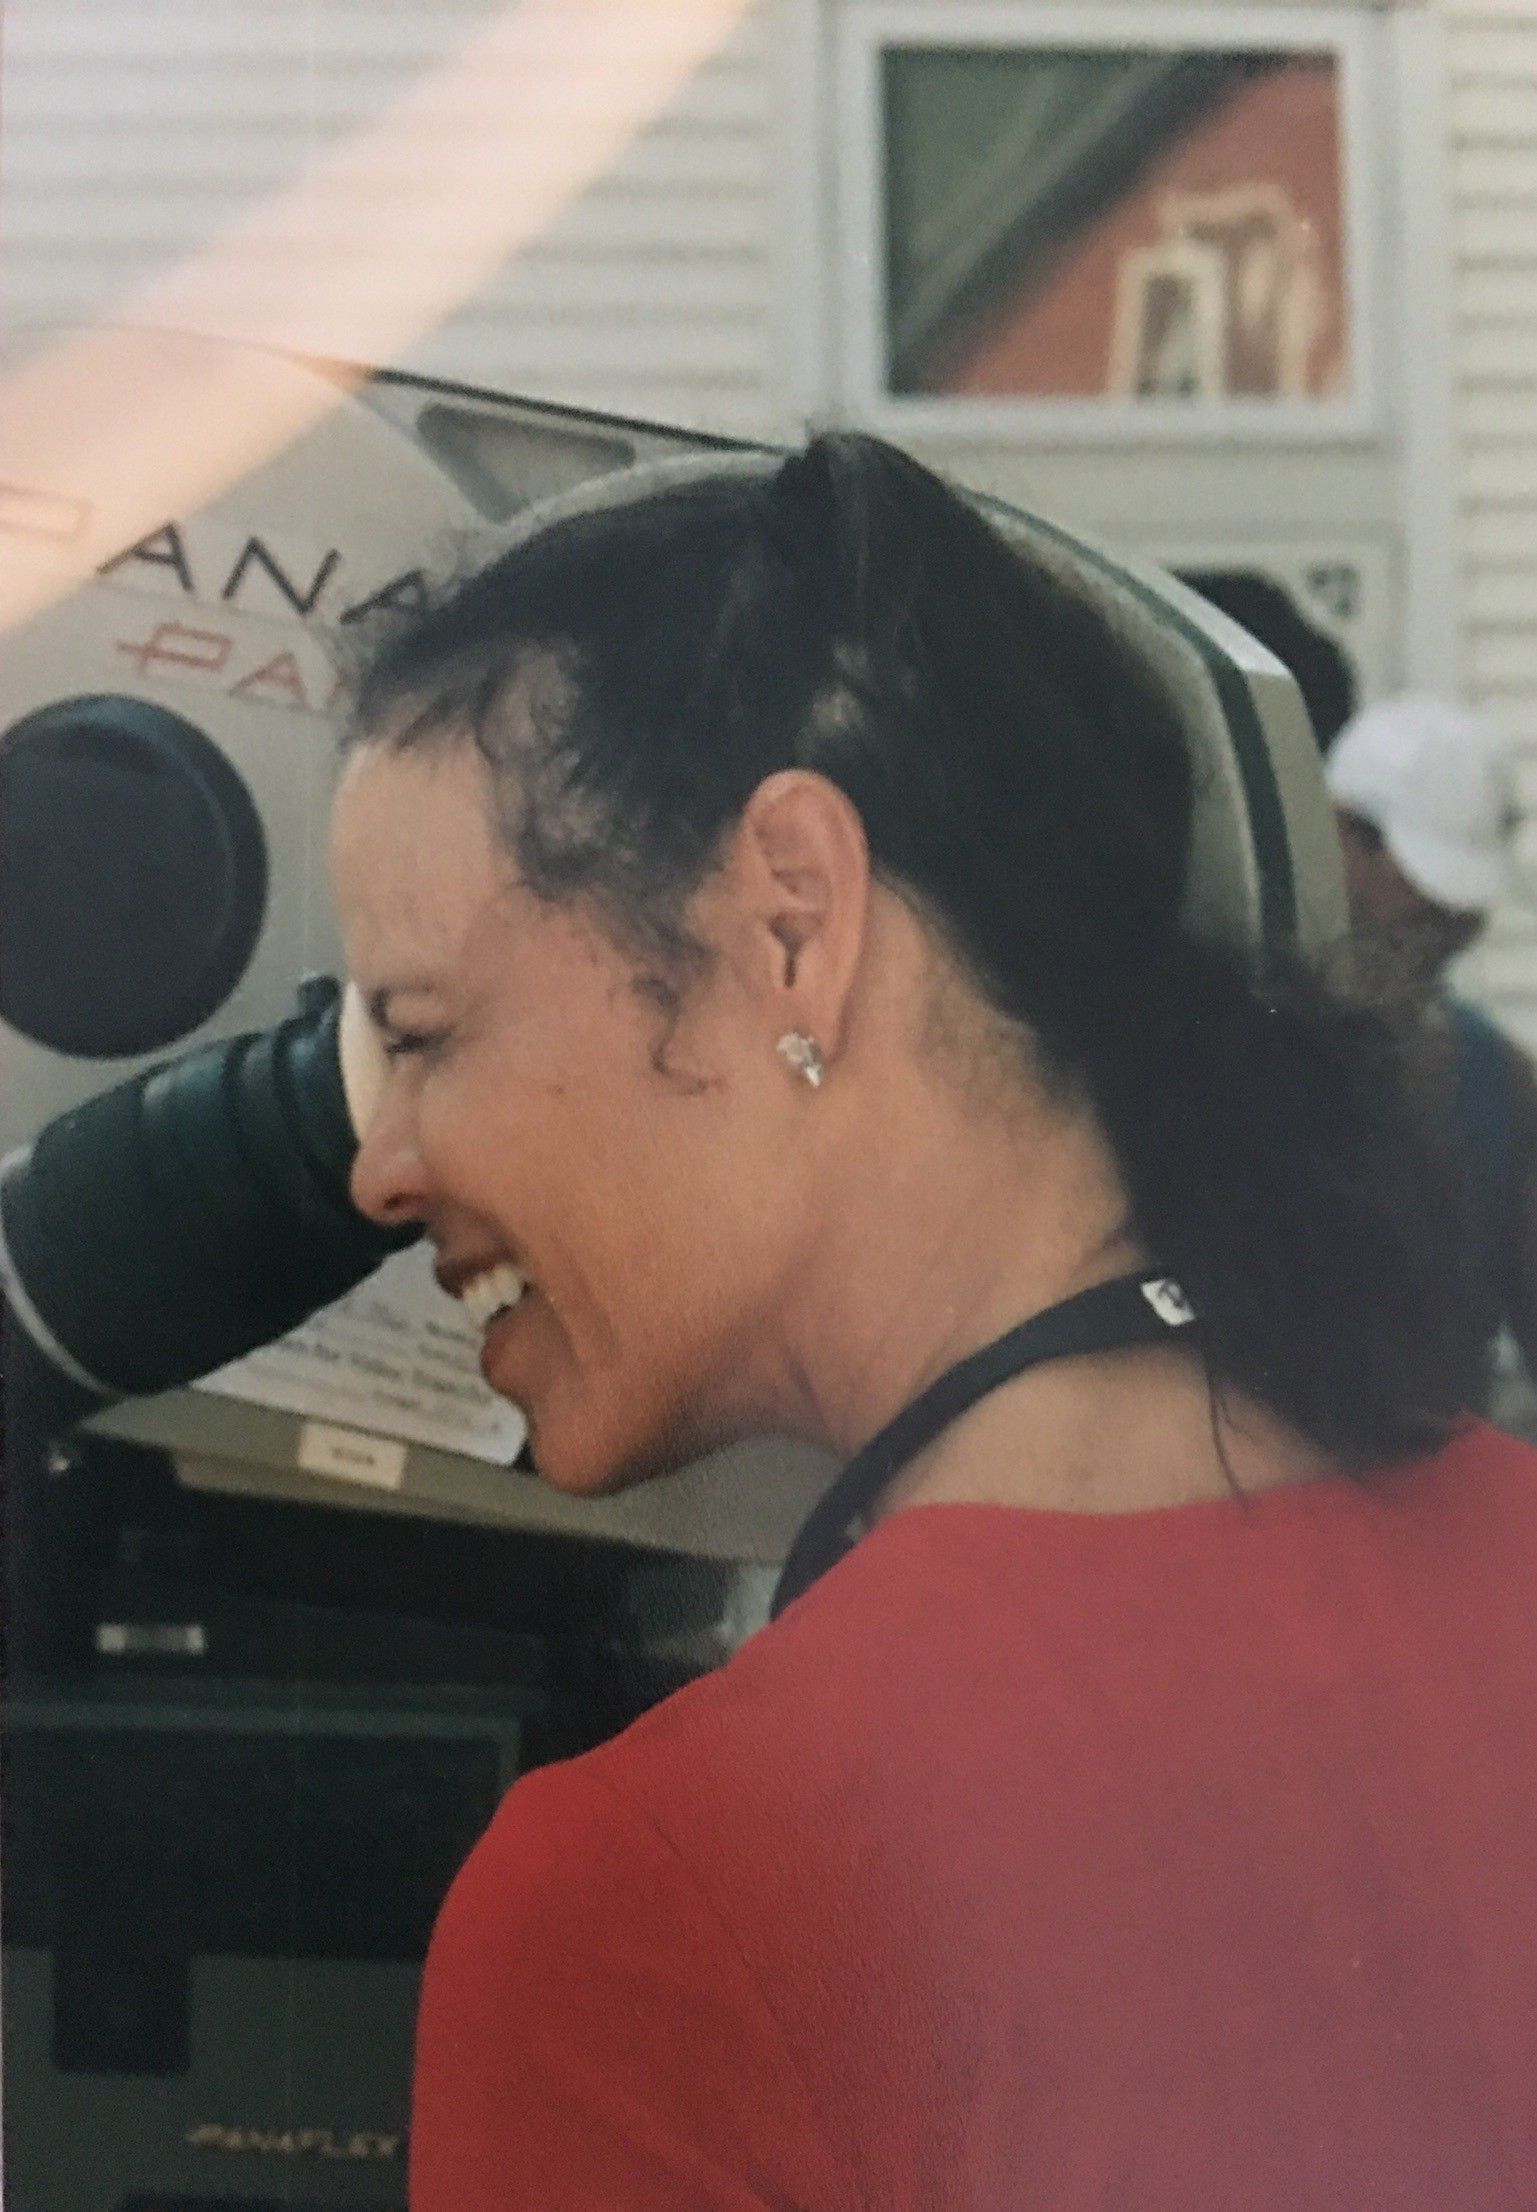 Deborah M. Pratt smiles as she looks through the camera lens.